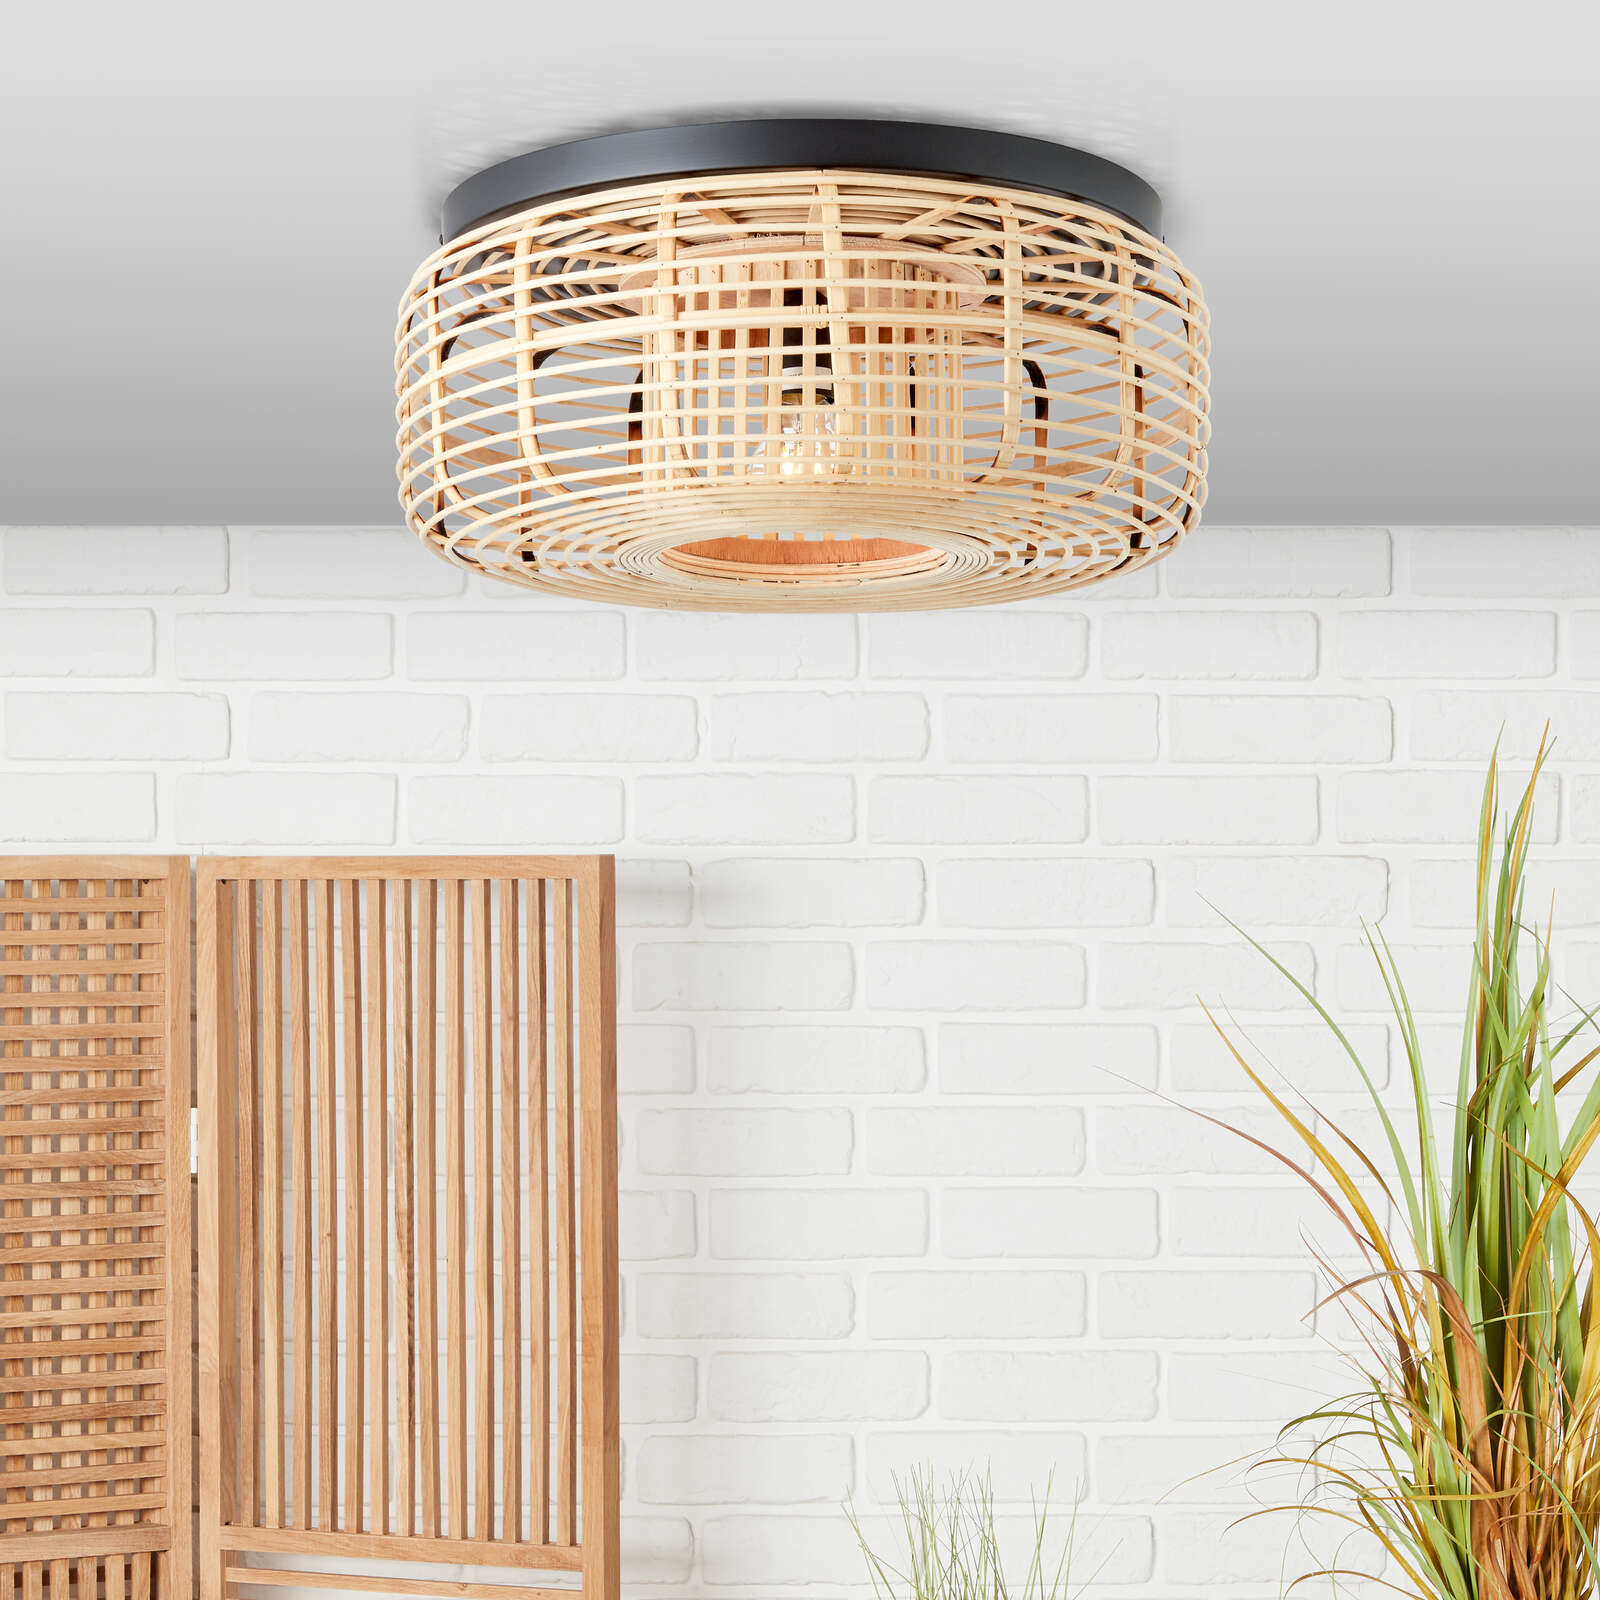             Bamboo ceiling light - Elma 3 - Brown
        